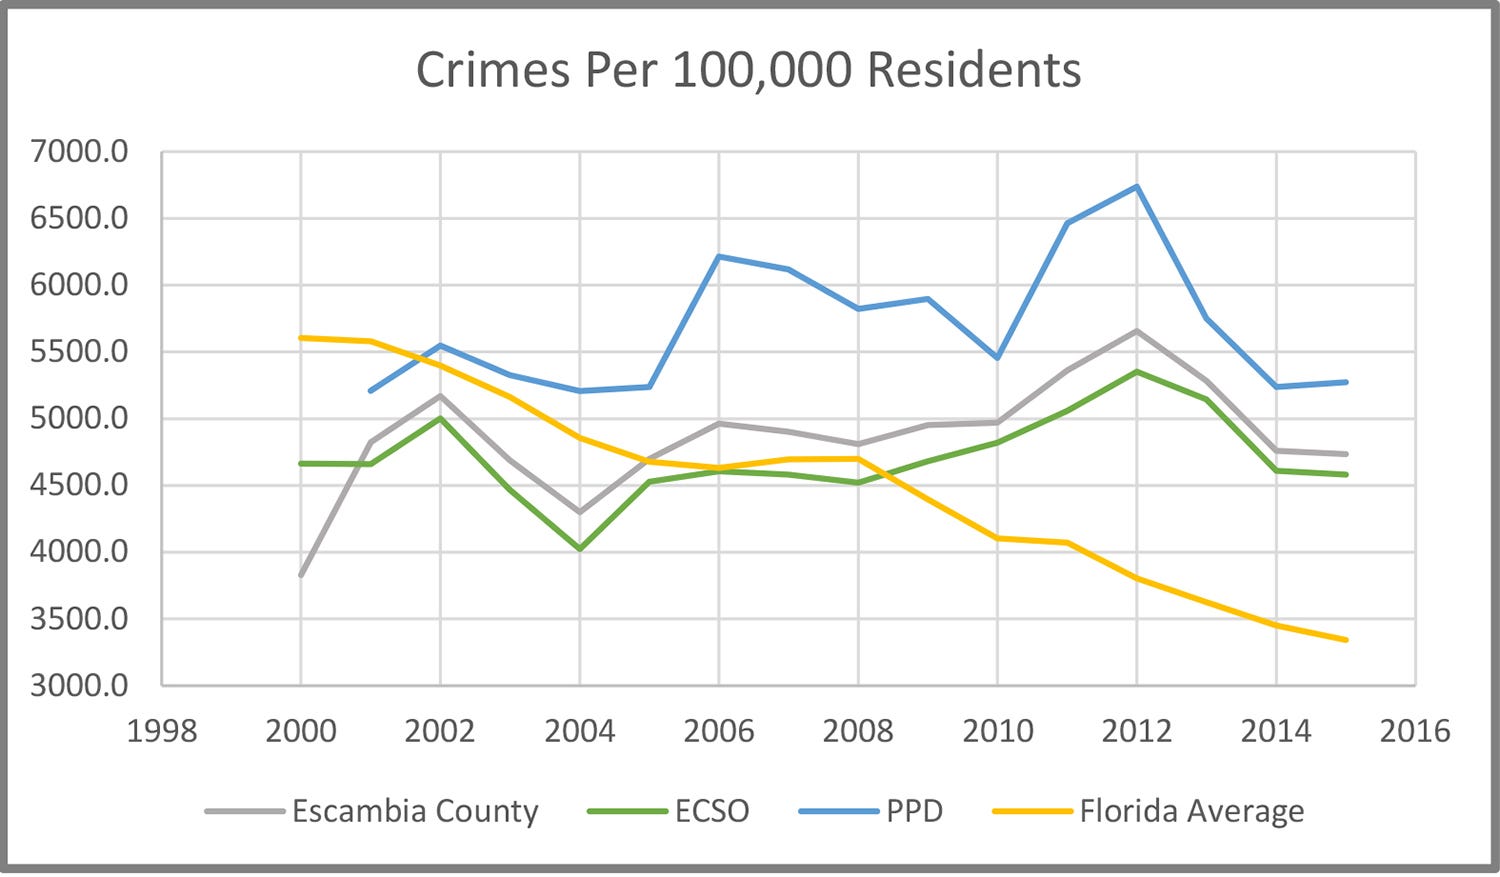 Crime Statistics Chart